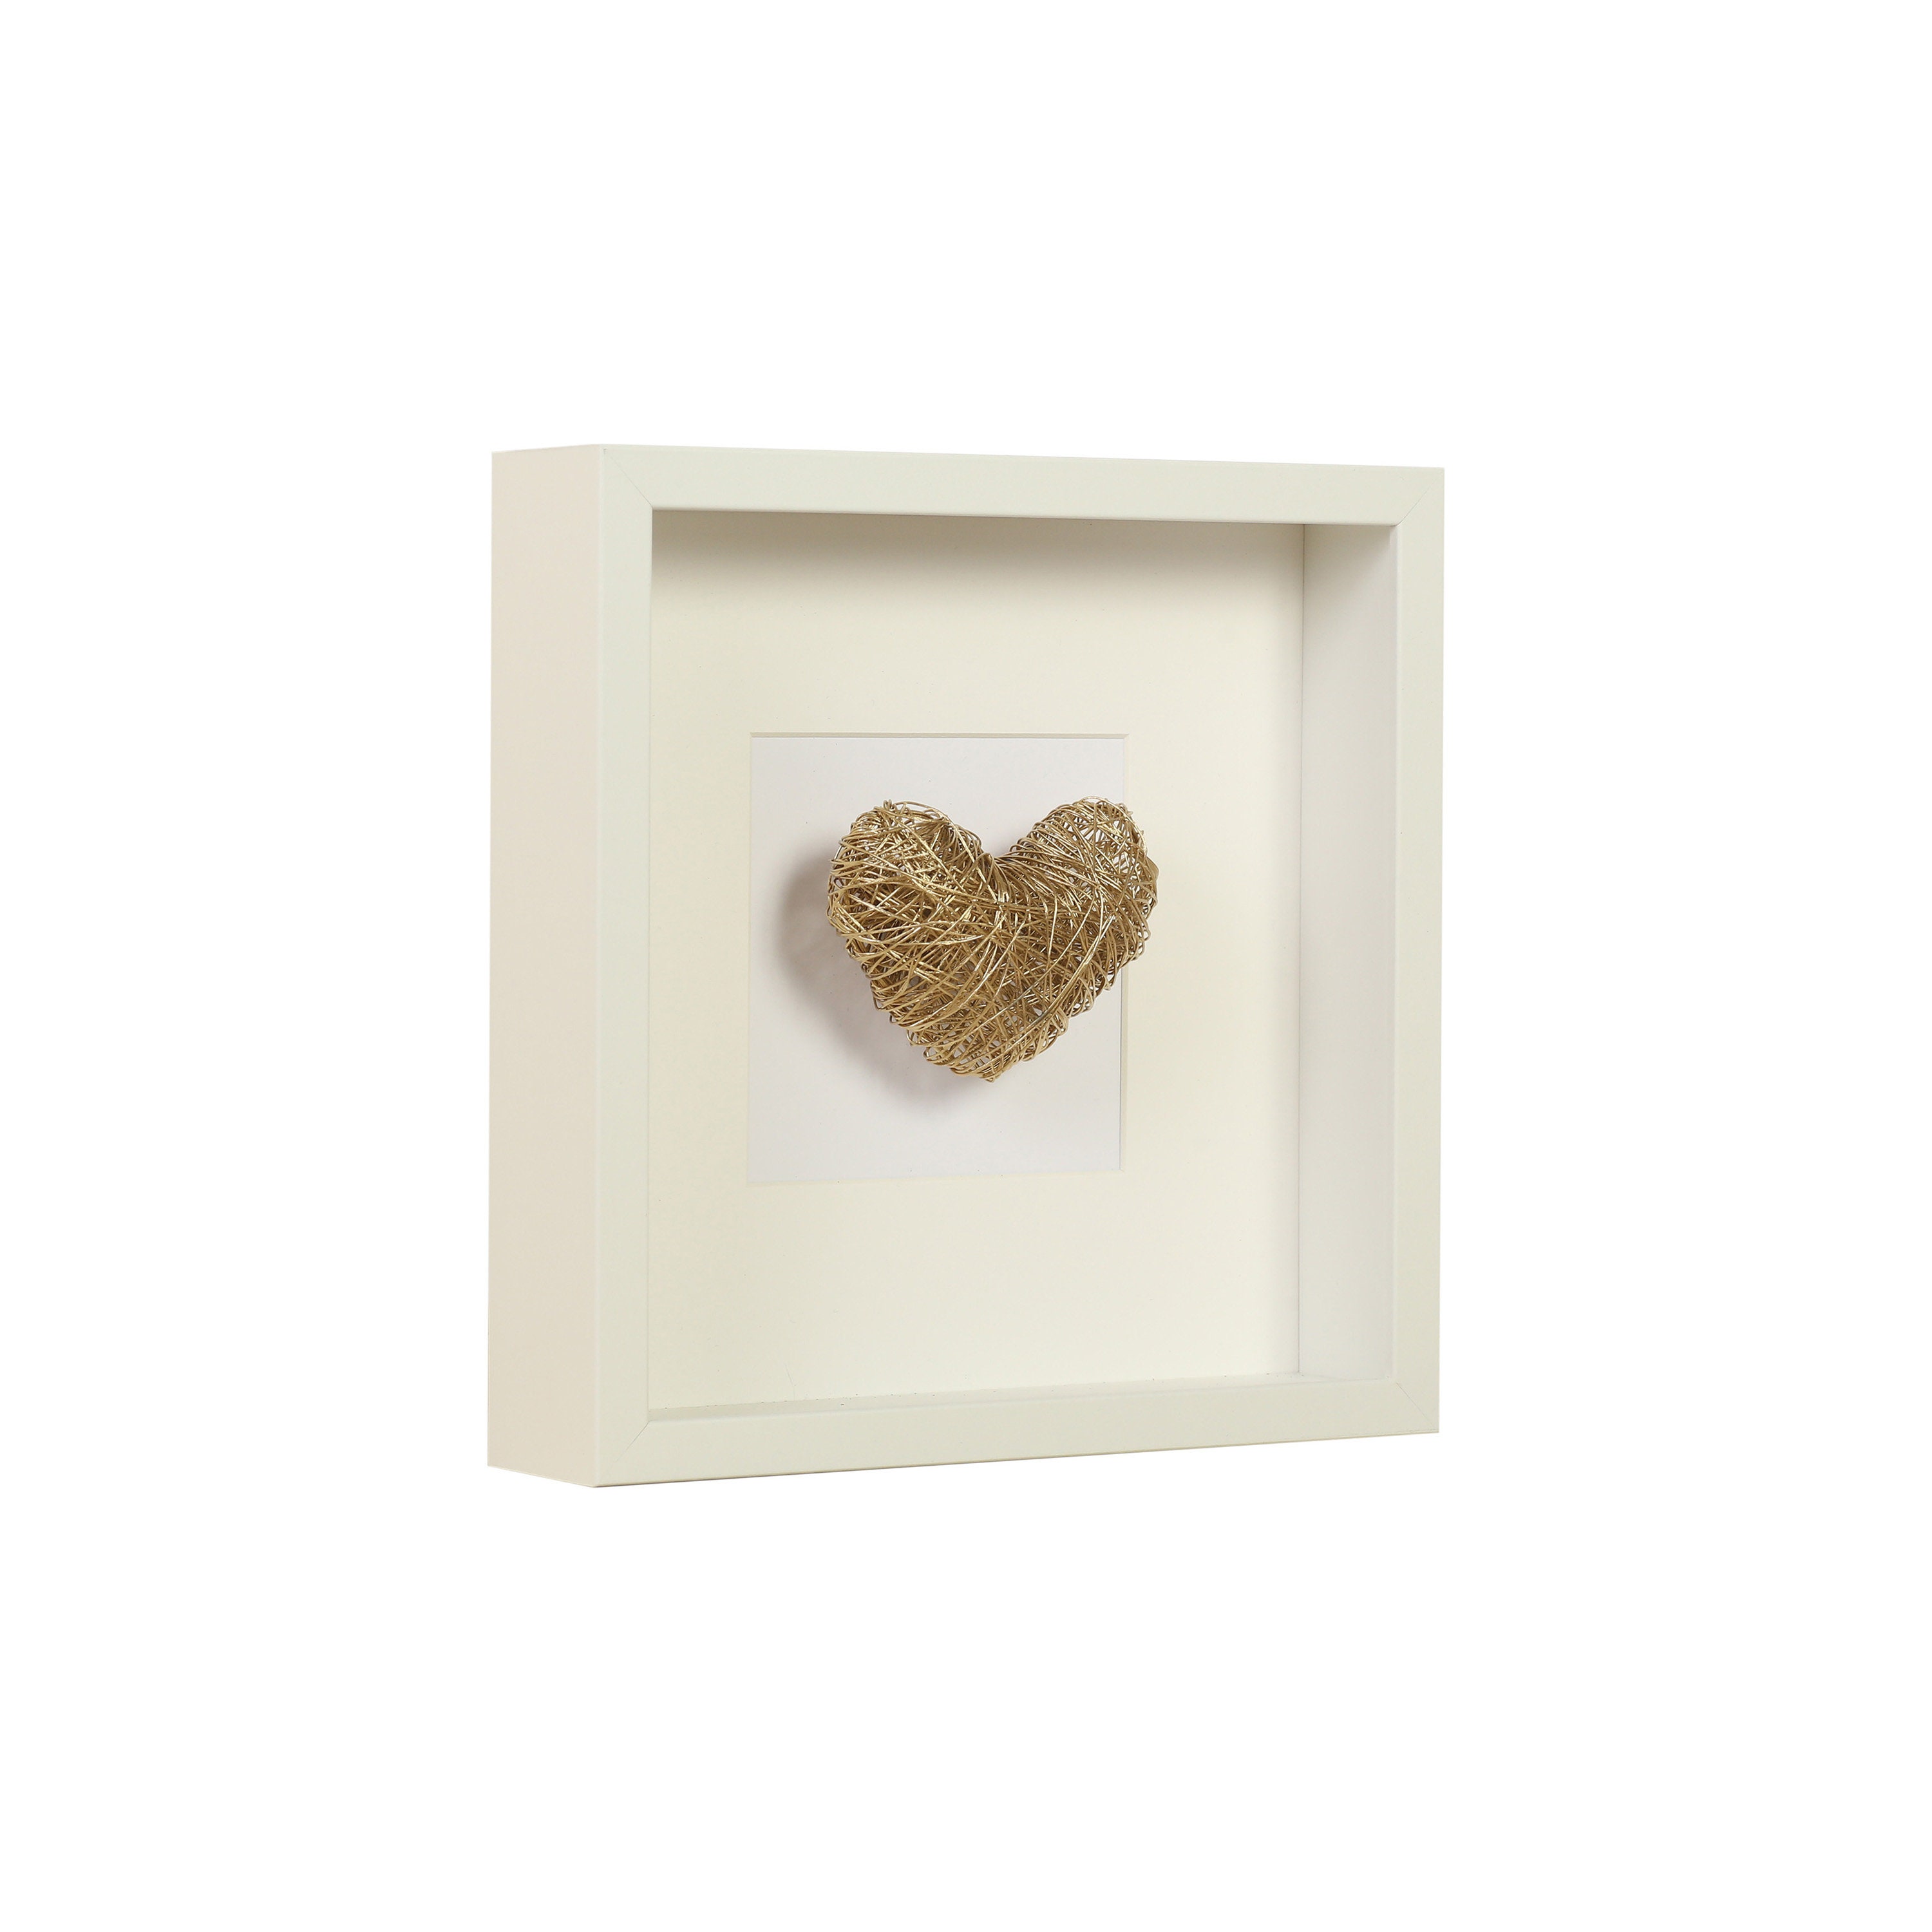 RIPTEADRY Heart Hands - Black/Gold Heart Hands Sculpture - Indoor Statue  Decor - Resin Craft Art Heart Shaped Hands Statue, Gifts for Home Living  Room